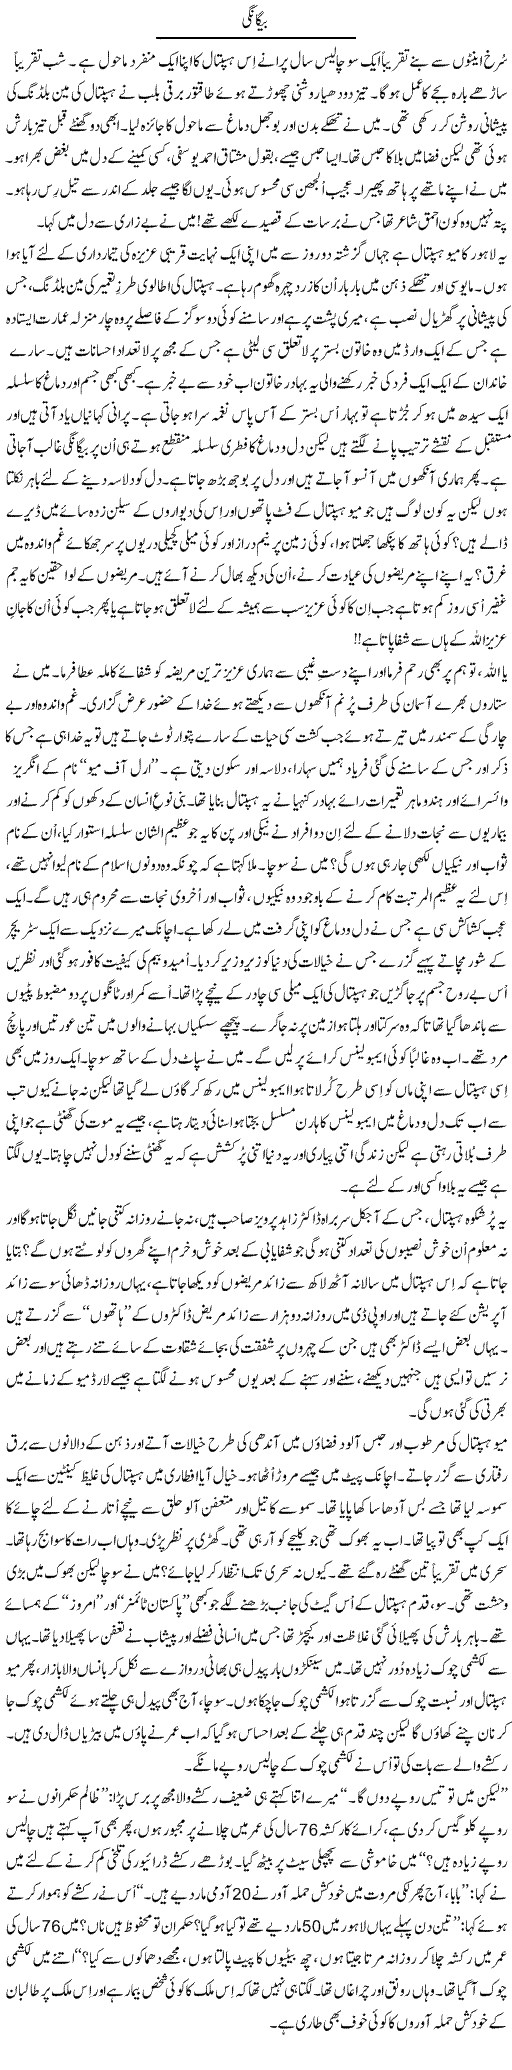 Ignorance Express Column Tanvir Qasir 8 September 2010